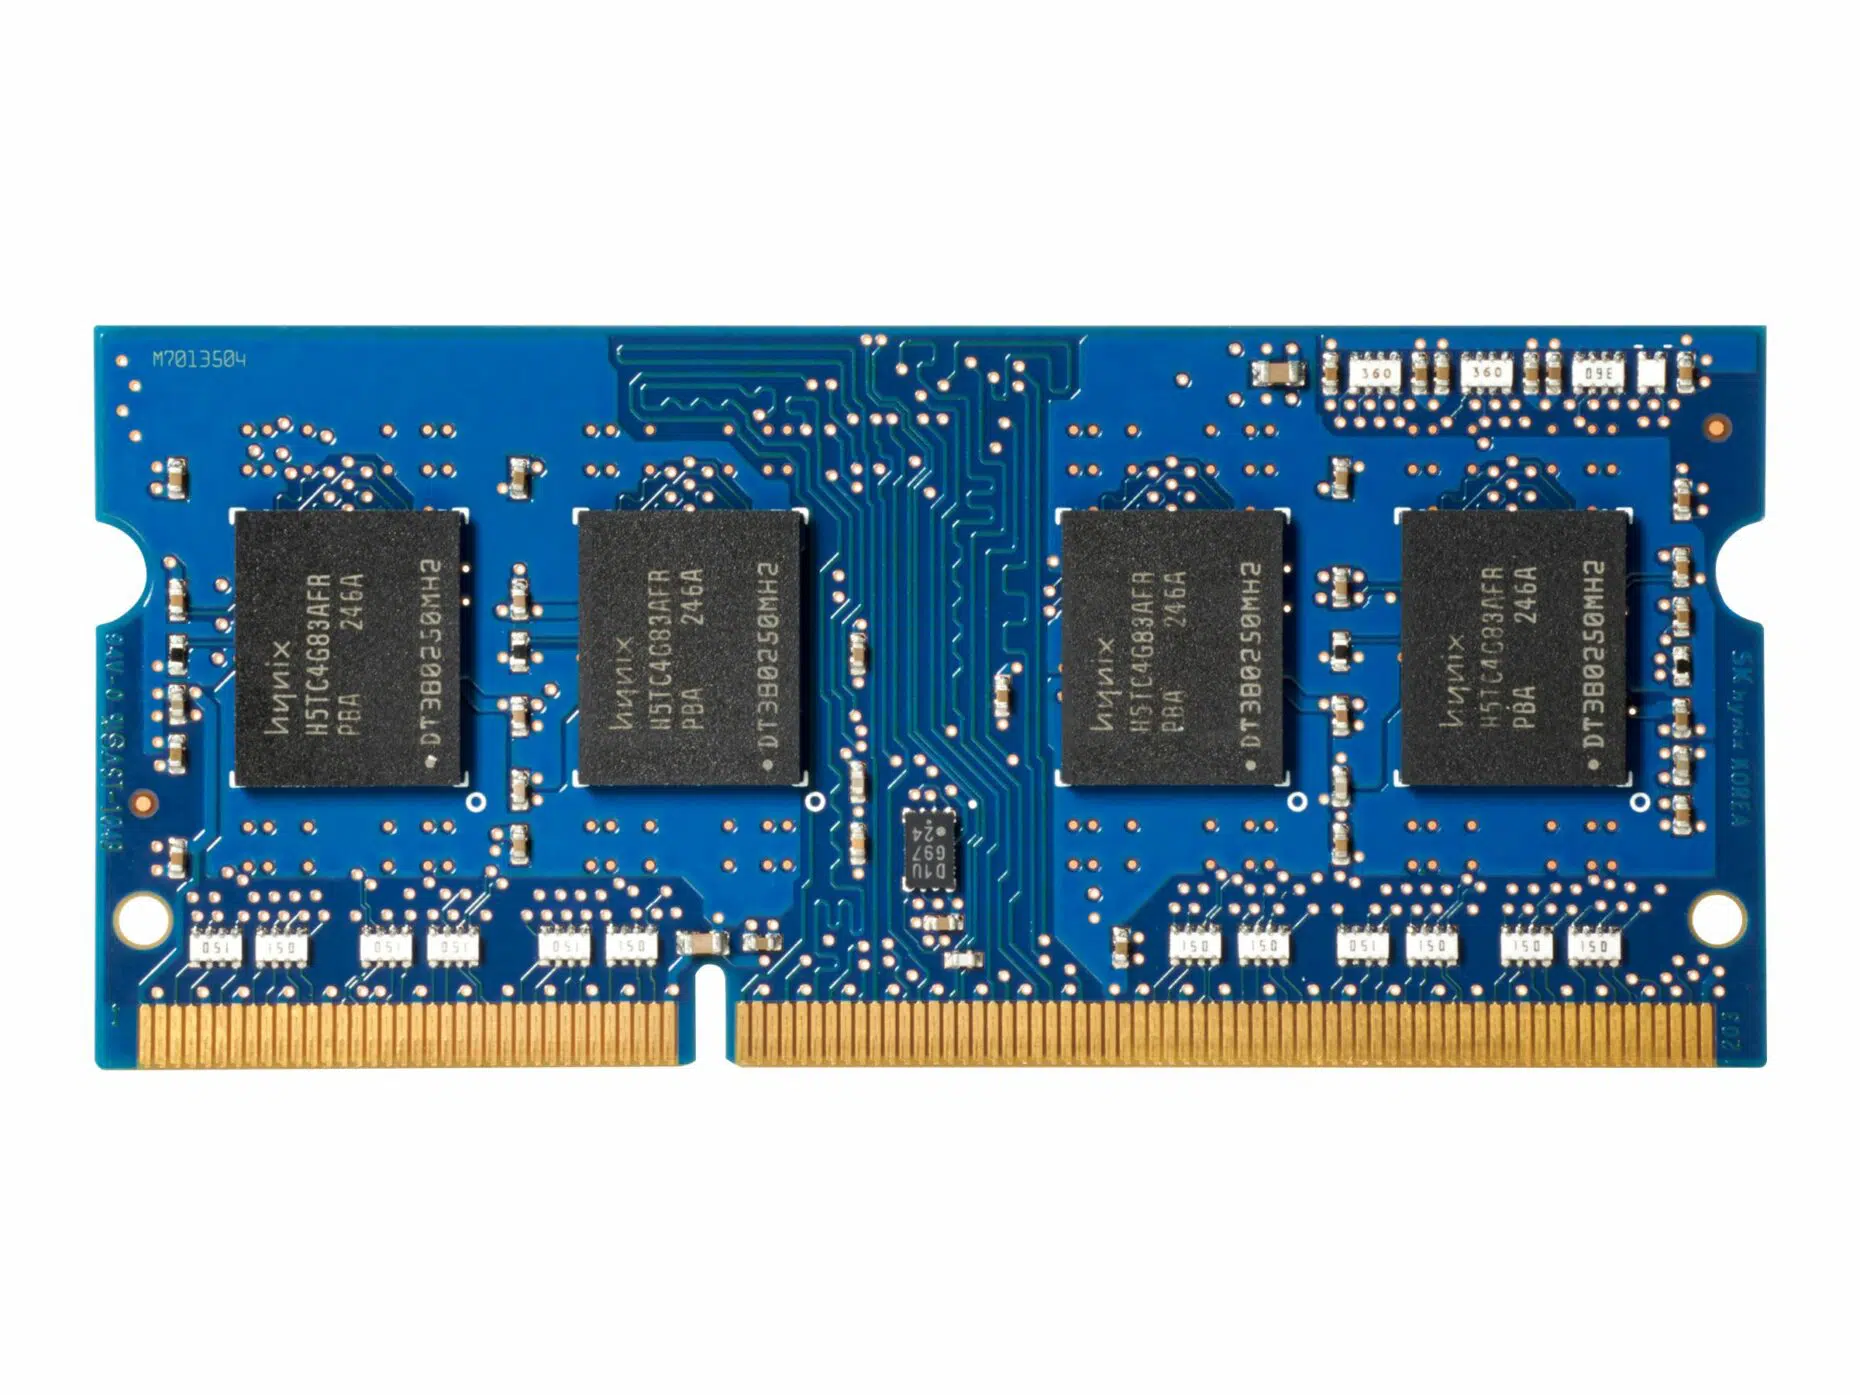 HP - DDR3 - 1 GB - SO-DIMM 144-pin - 800 MHz / PC3-6400 - Ram